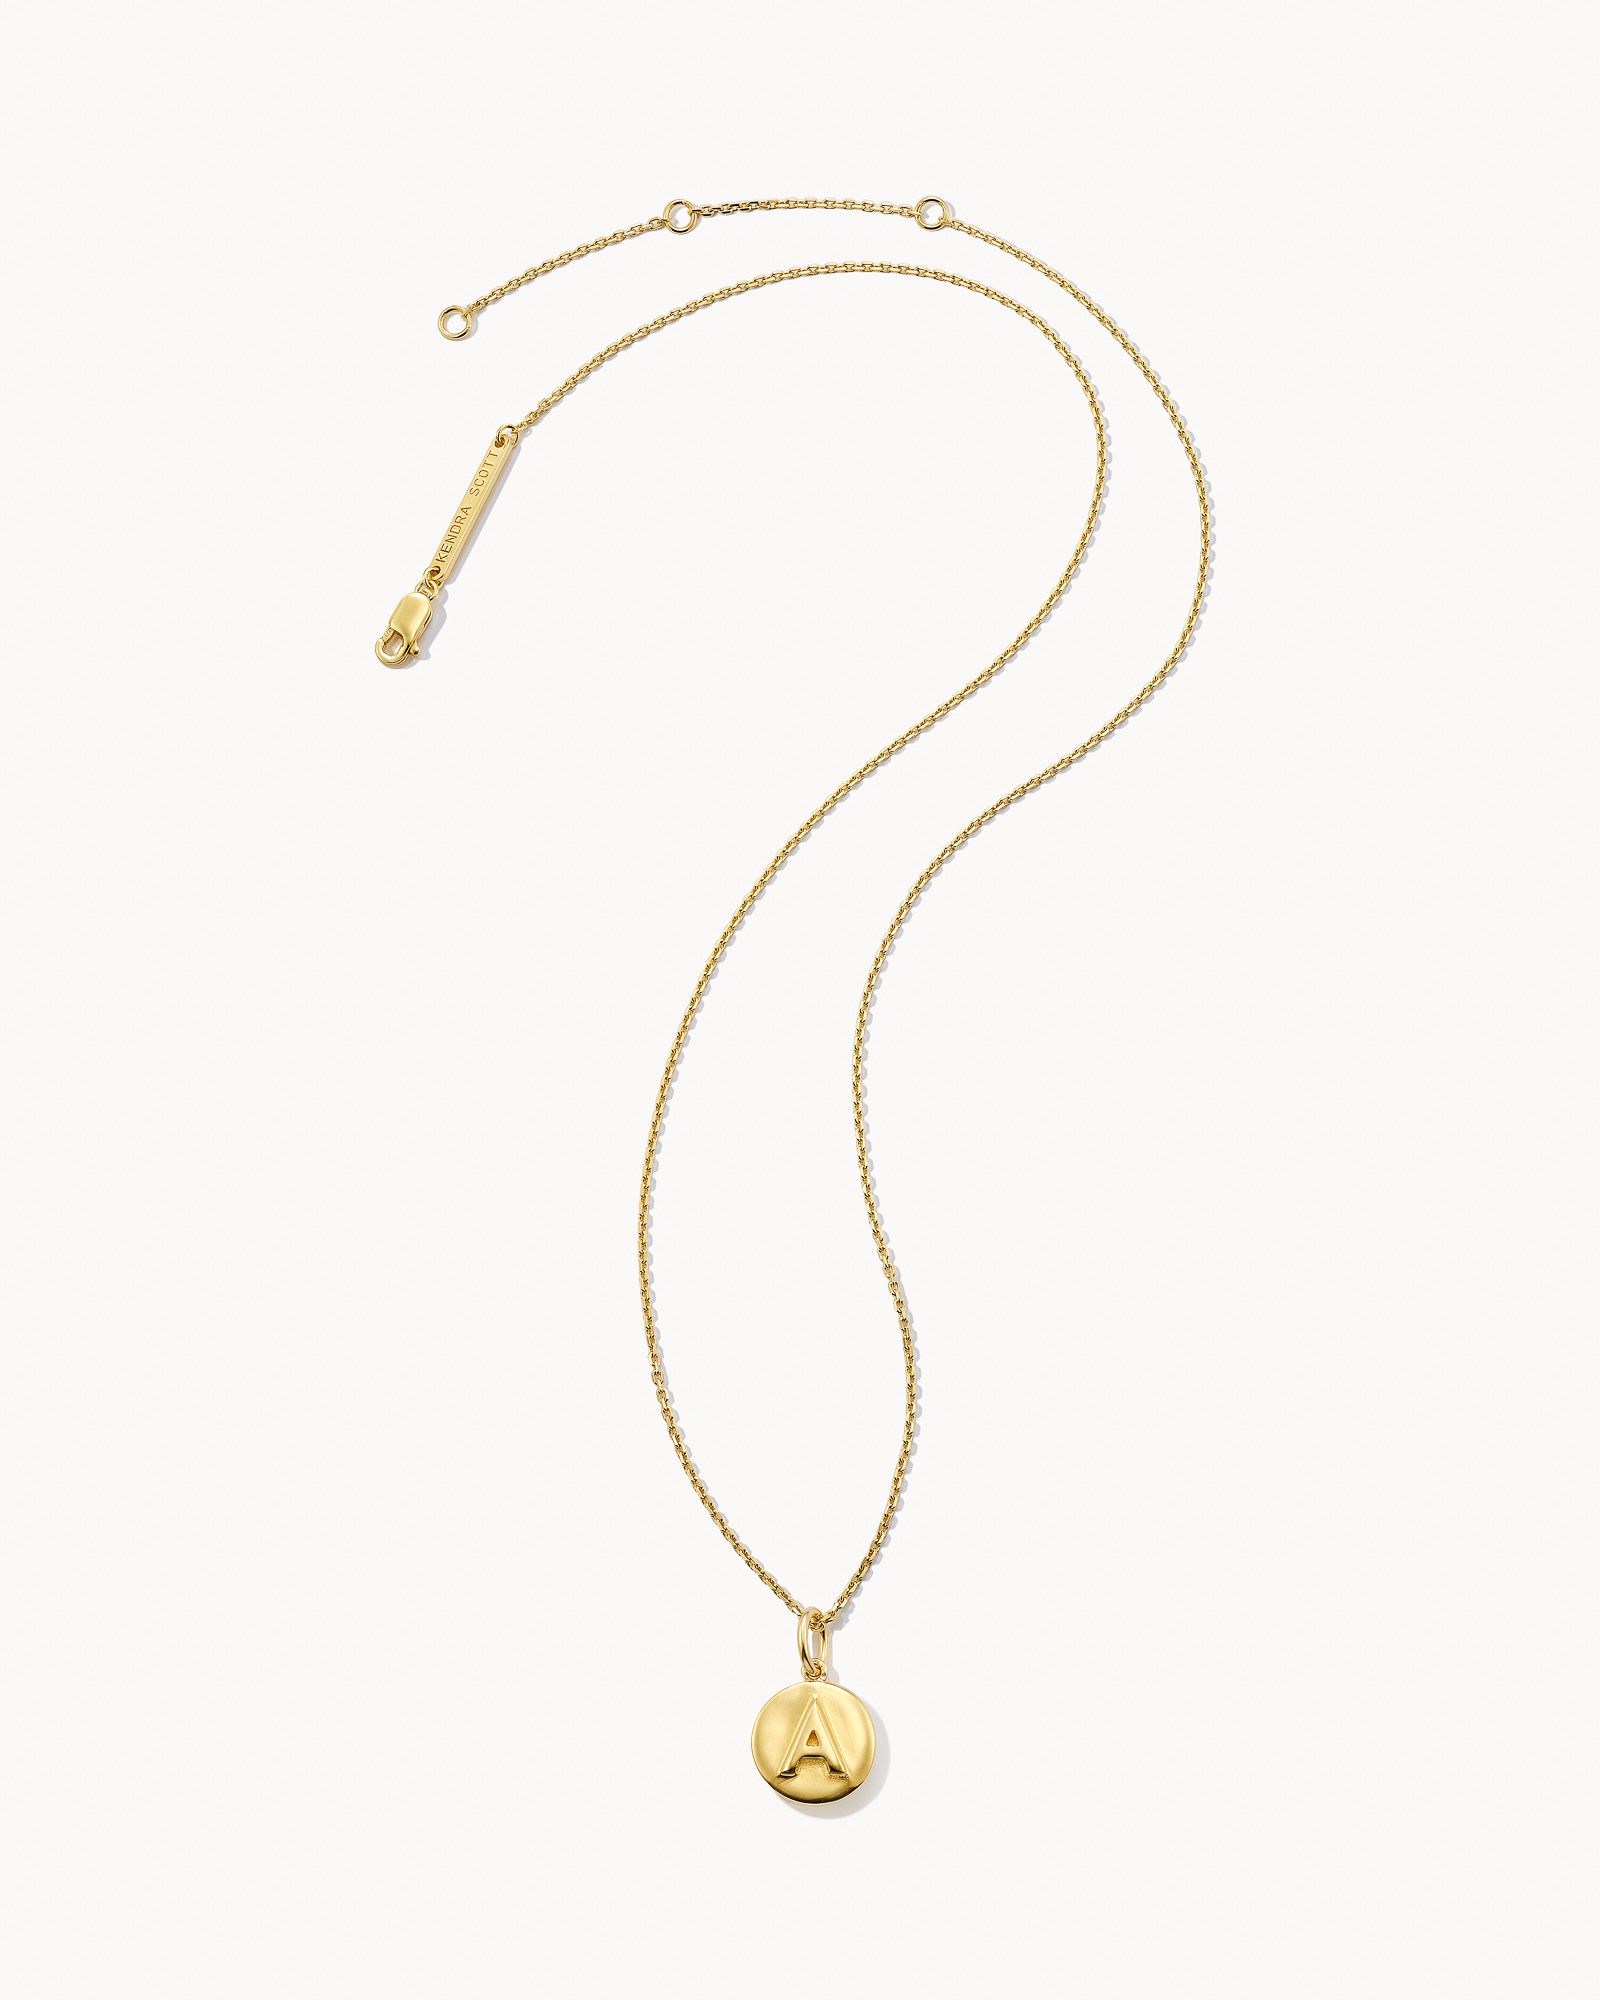 Letter A Coin Pendant Necklace in 18k Gold Vermeil | Kendra Scott